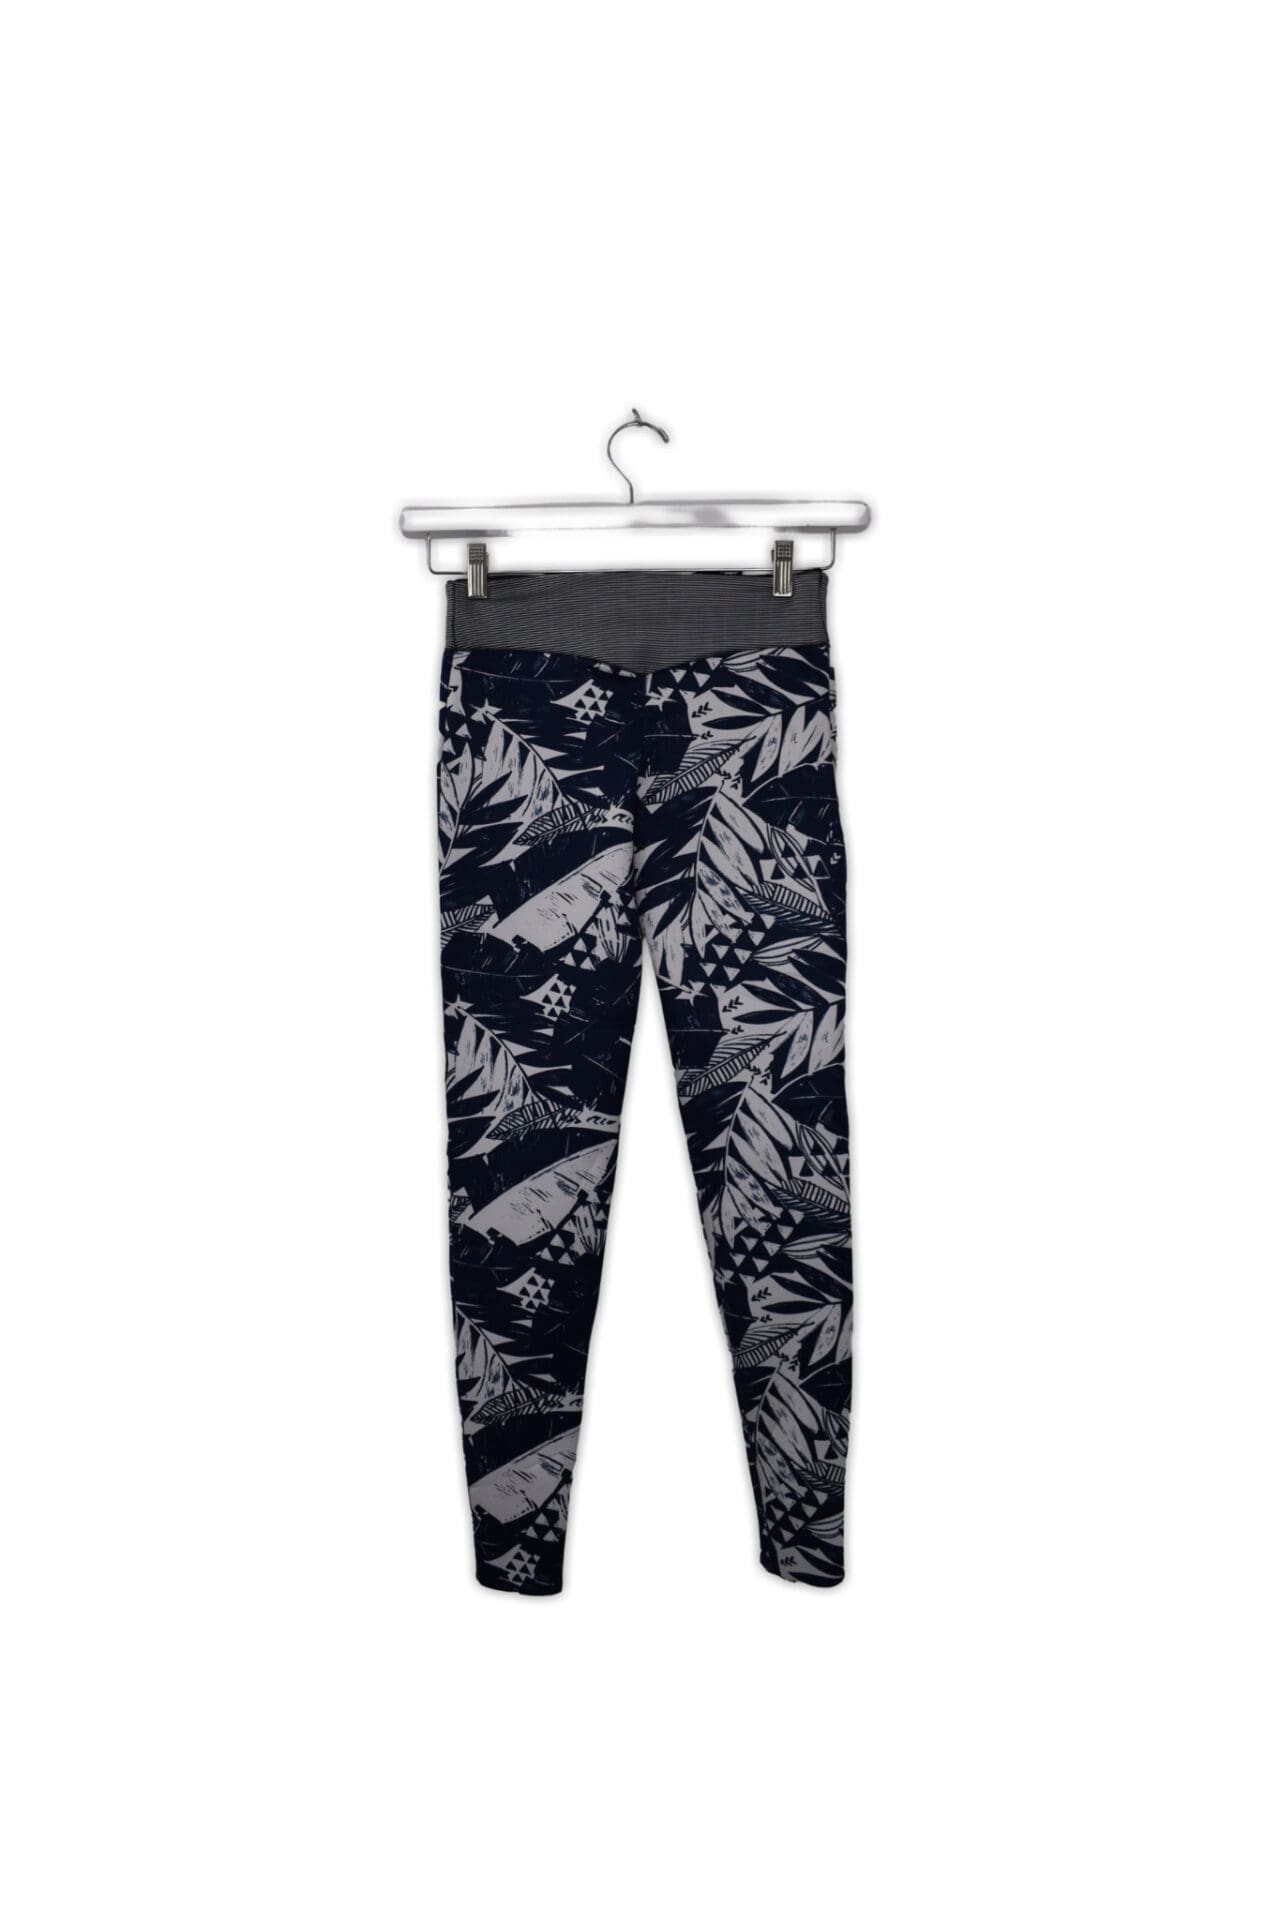 Tropical foliage patterned neoprene leggings